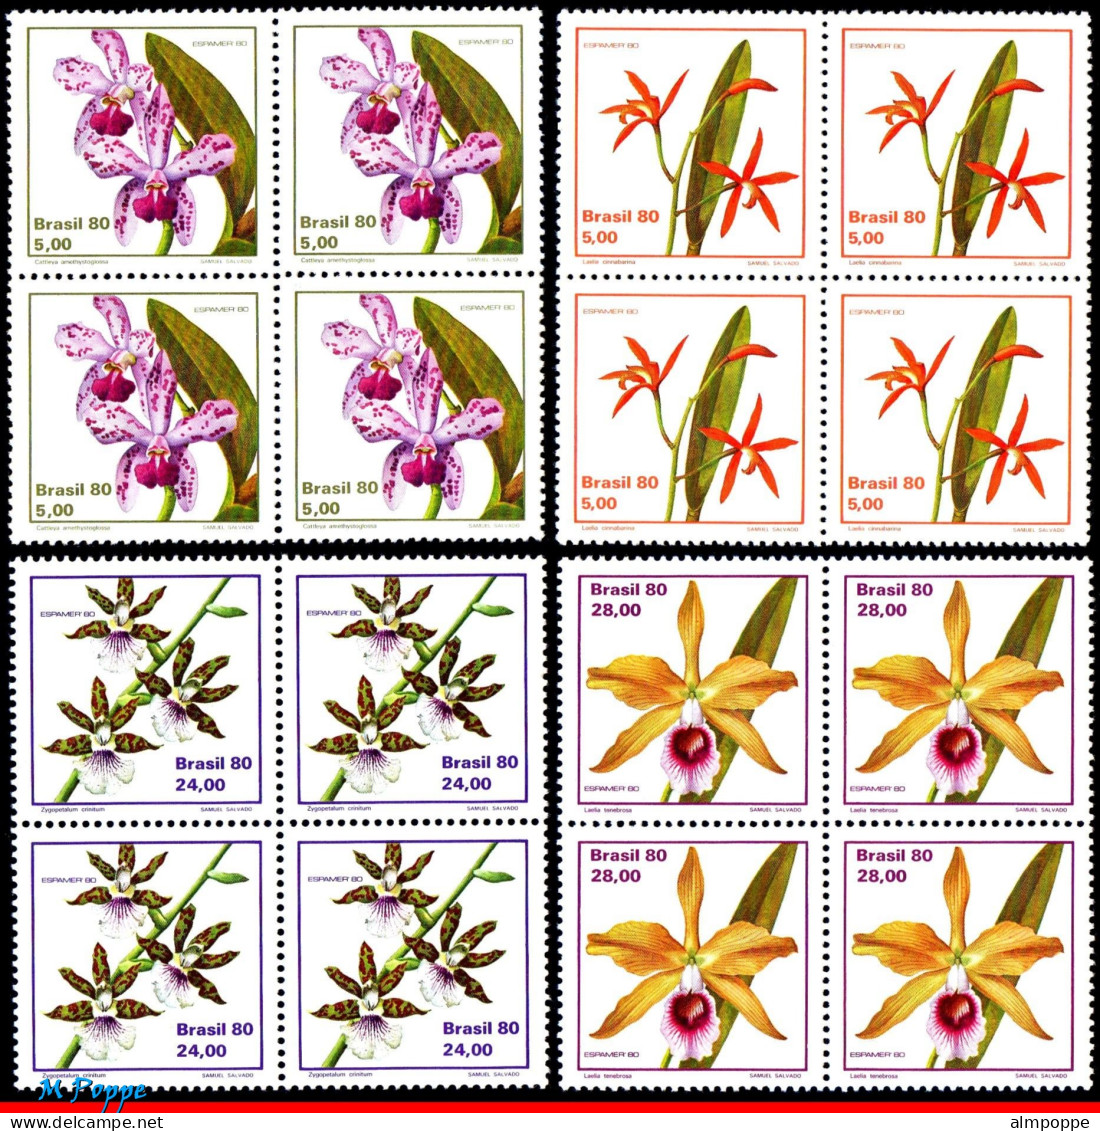 Ref. BR-1711-14Q BRAZIL 1980 - ORCHIDS,PHILATELICEXHIBITION,MI# 1785-88,BLOCKS MNH, FLOWERS, PLANTS 16V Sc# 1711-1714 - Blocks & Kleinbögen